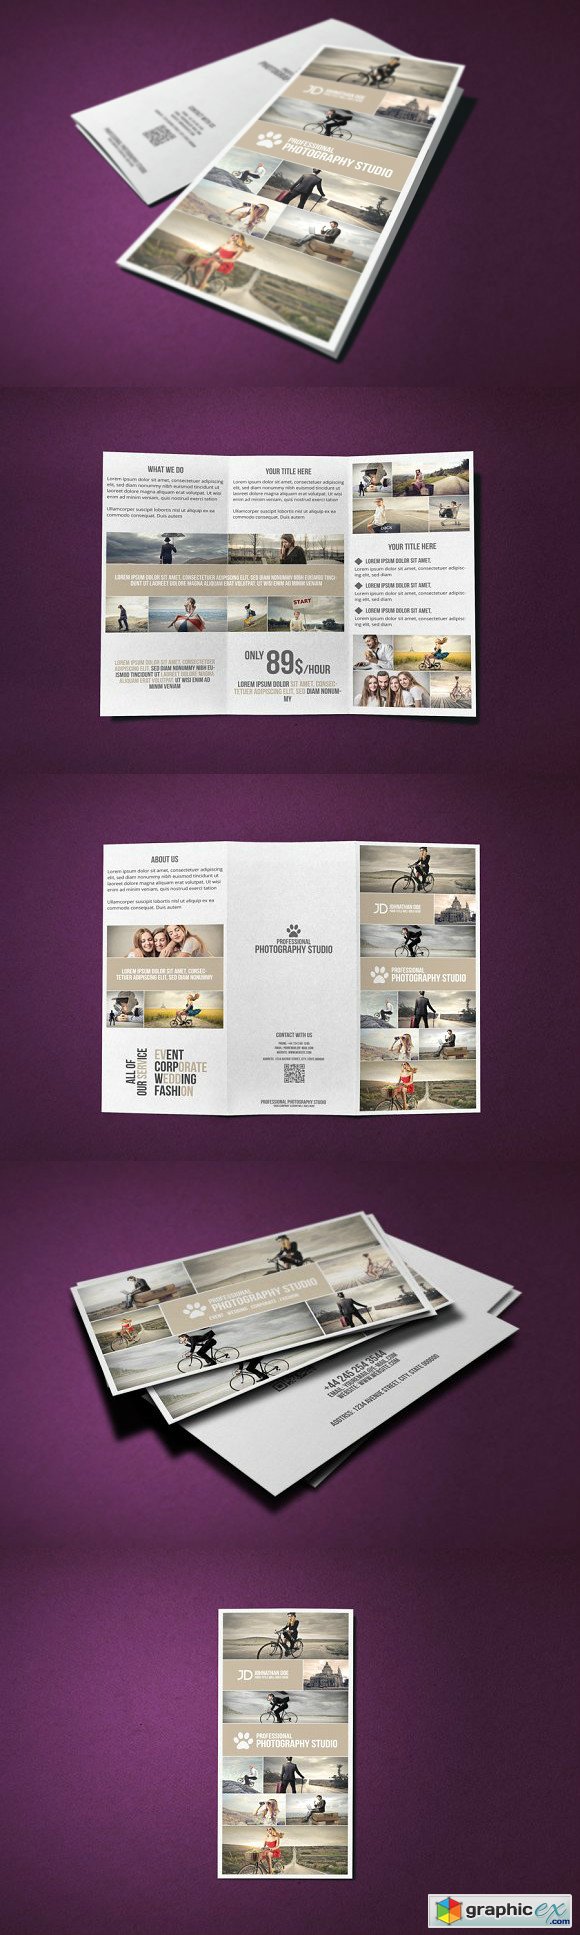 Photography Studio Brochure & Card